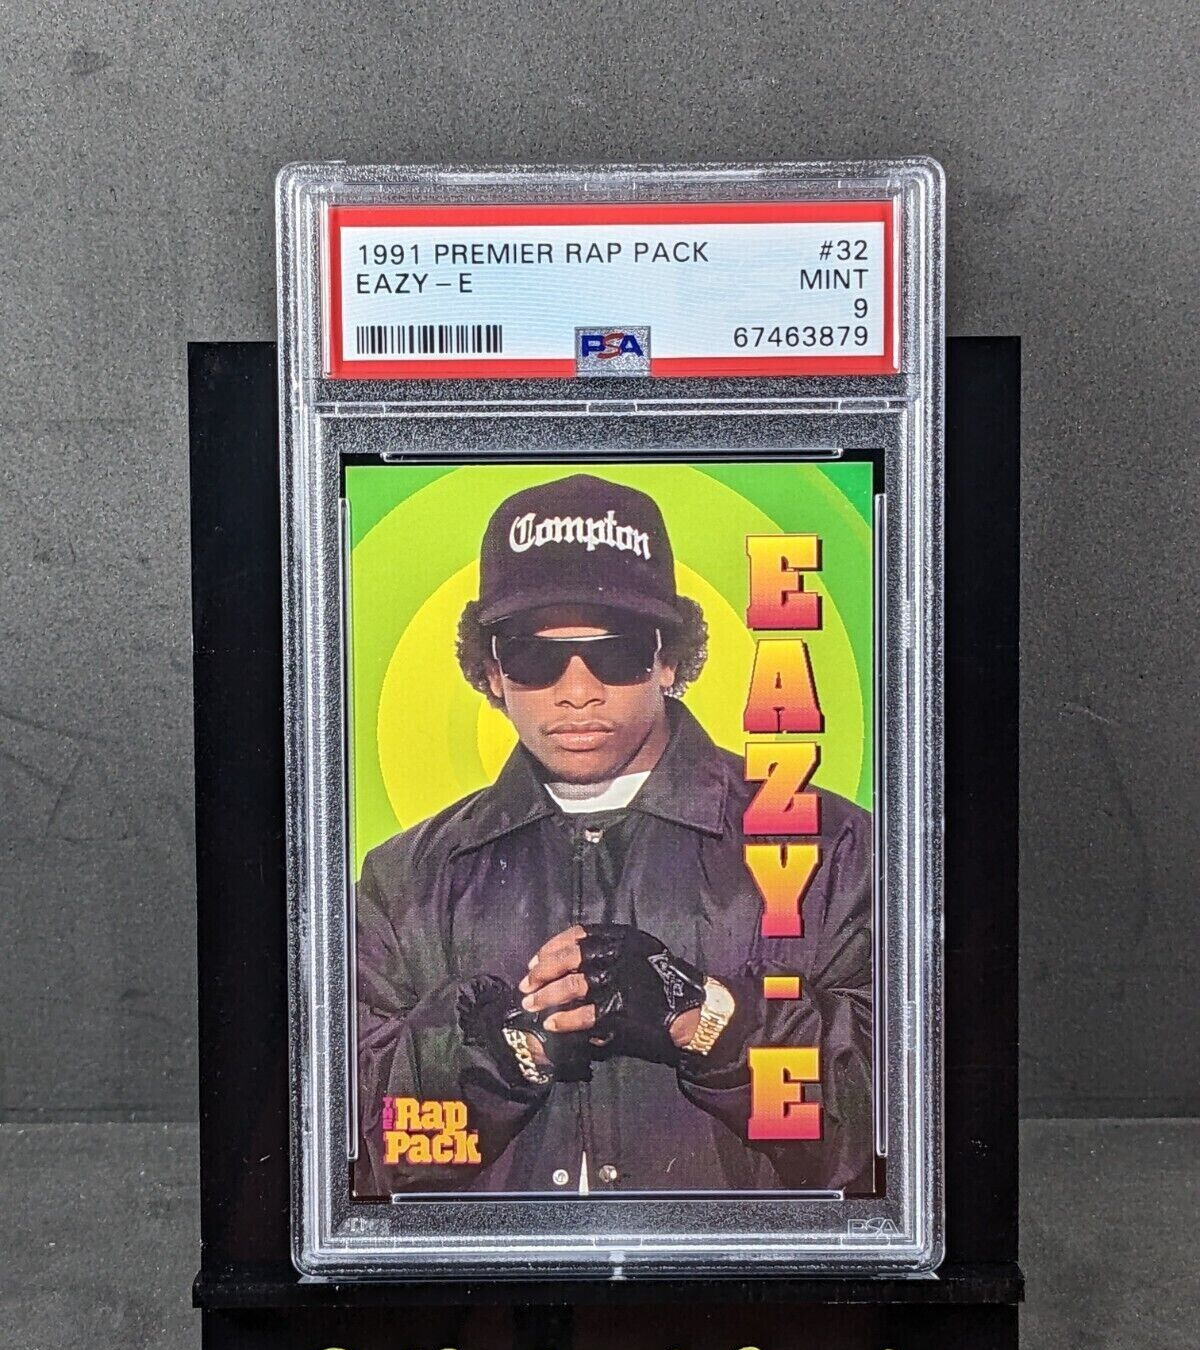 1991 PREMIER RAP PACK EAZY-E Rookie (N. W. A.) #32 PSA 9 Mint Trading Card